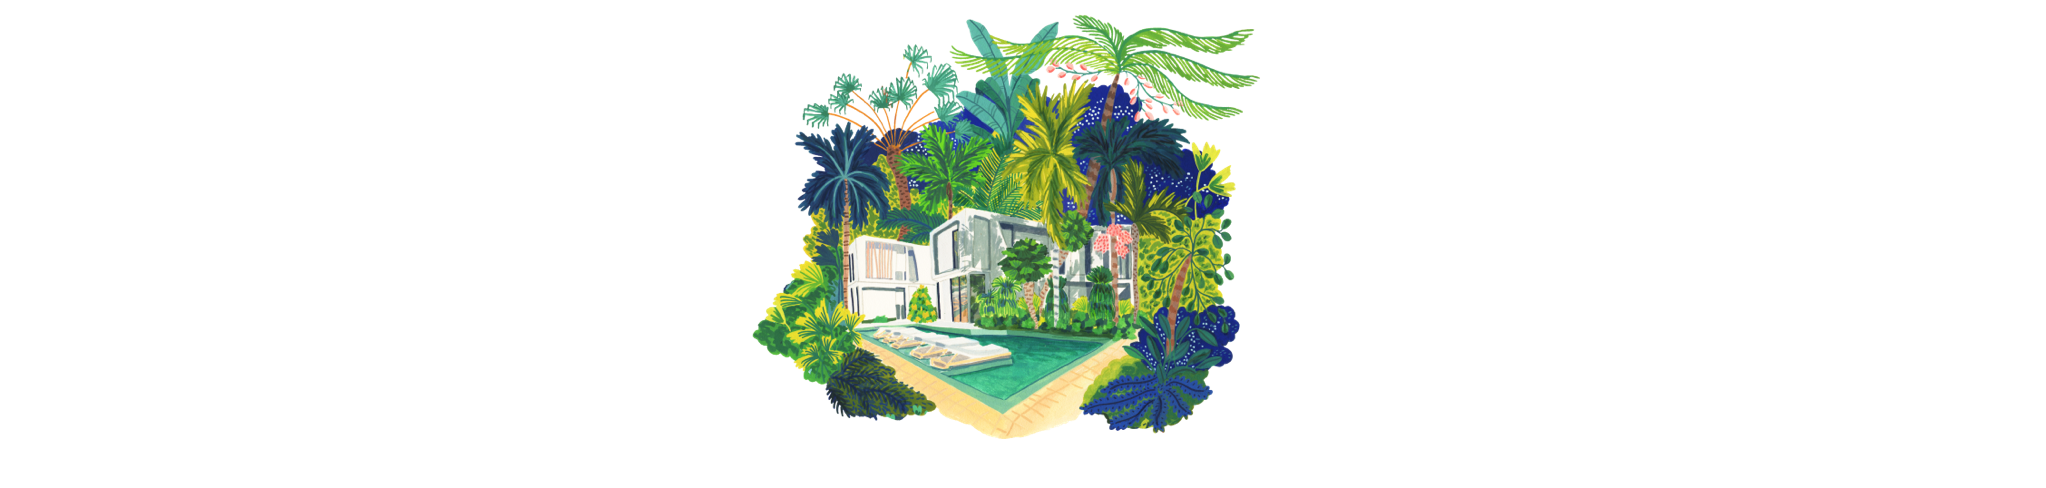 La Maison Palmier Abidjan, hotel palmier Abidjan, villa palmier, illustration